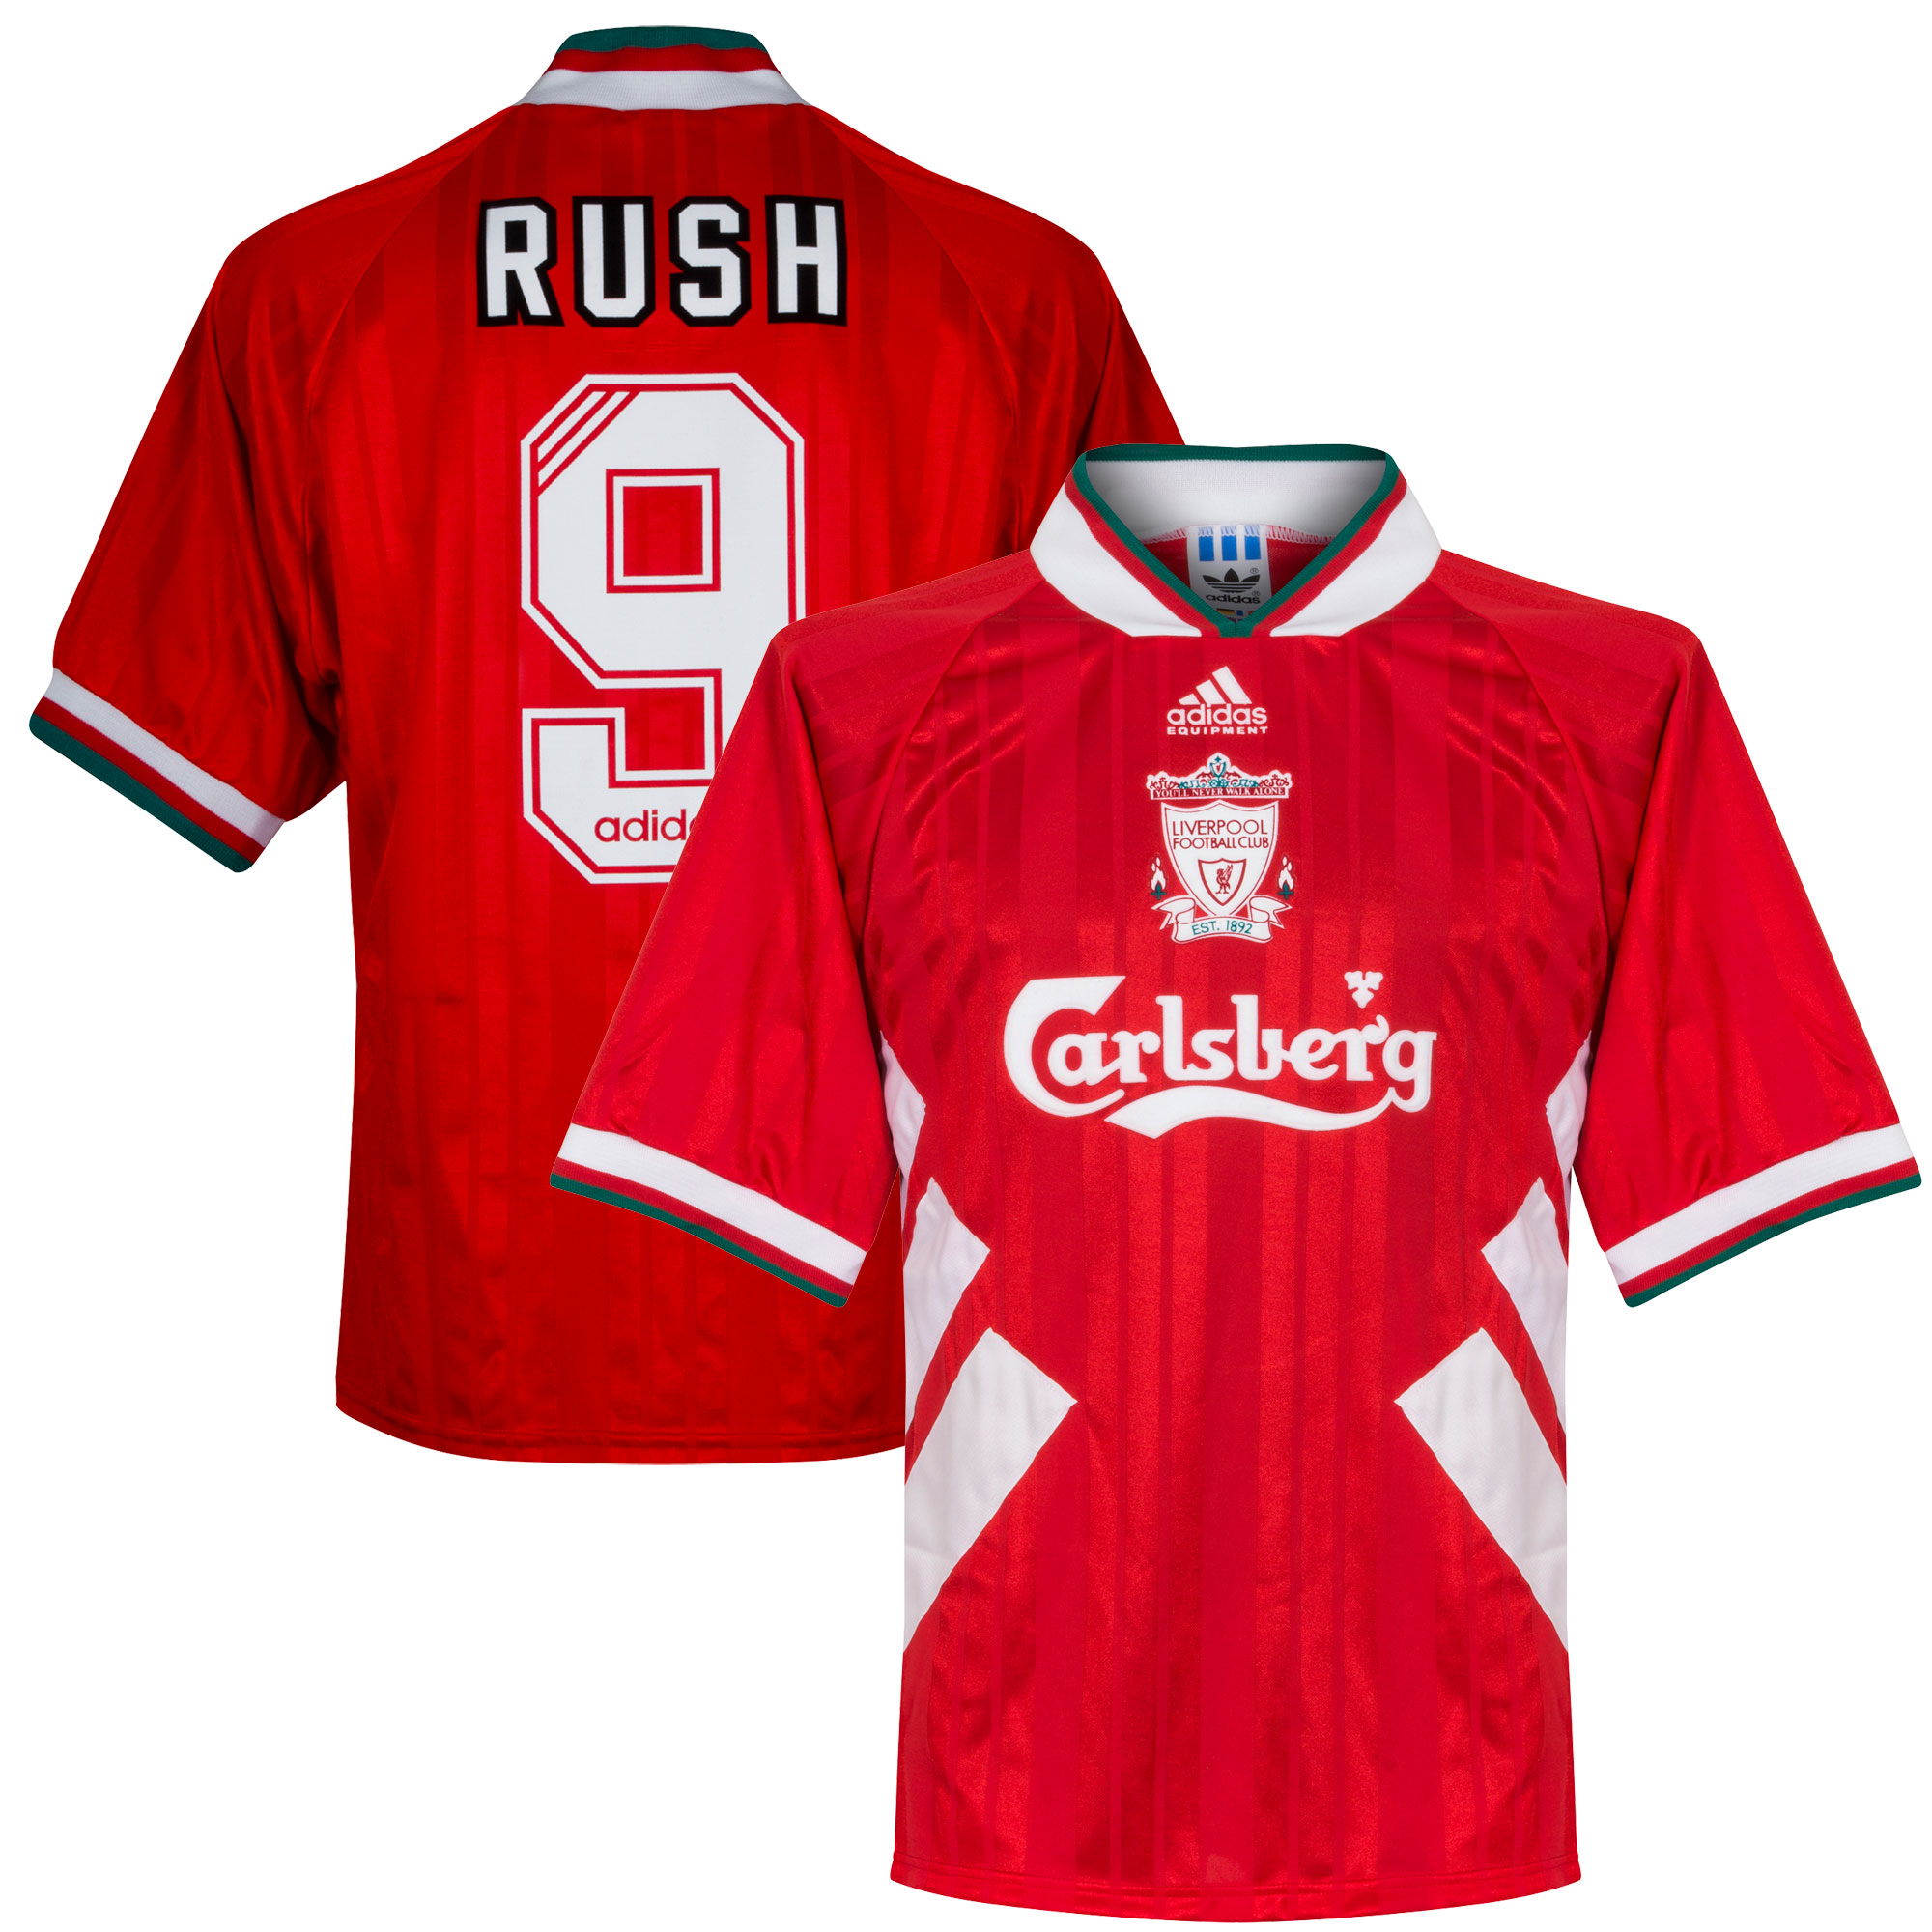 Liverpool Shirt Thuis 1993-1995 + Rush 9 Maat L